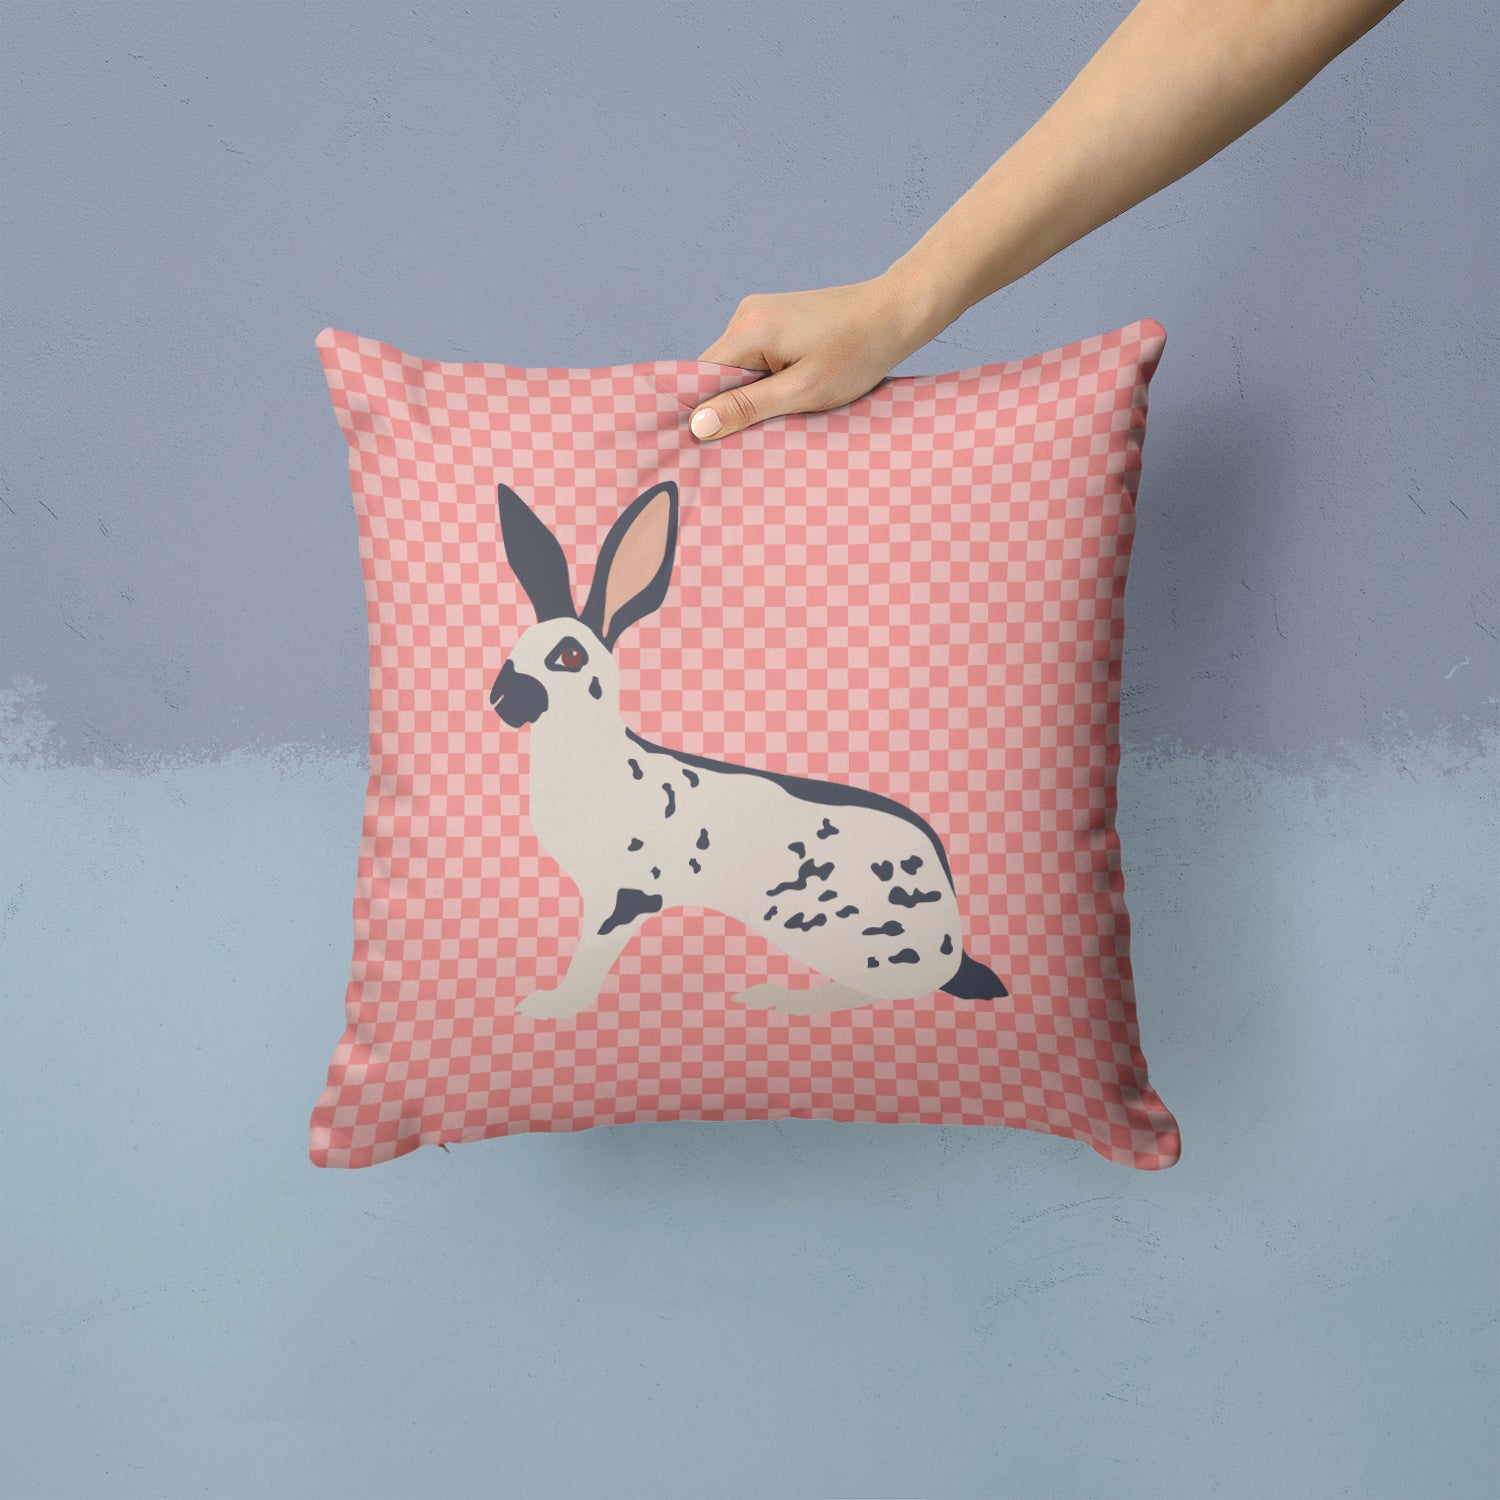 English Spot Rabbit Pink Check Fabric Decorative Pillow BB7961PW1414 - the-store.com